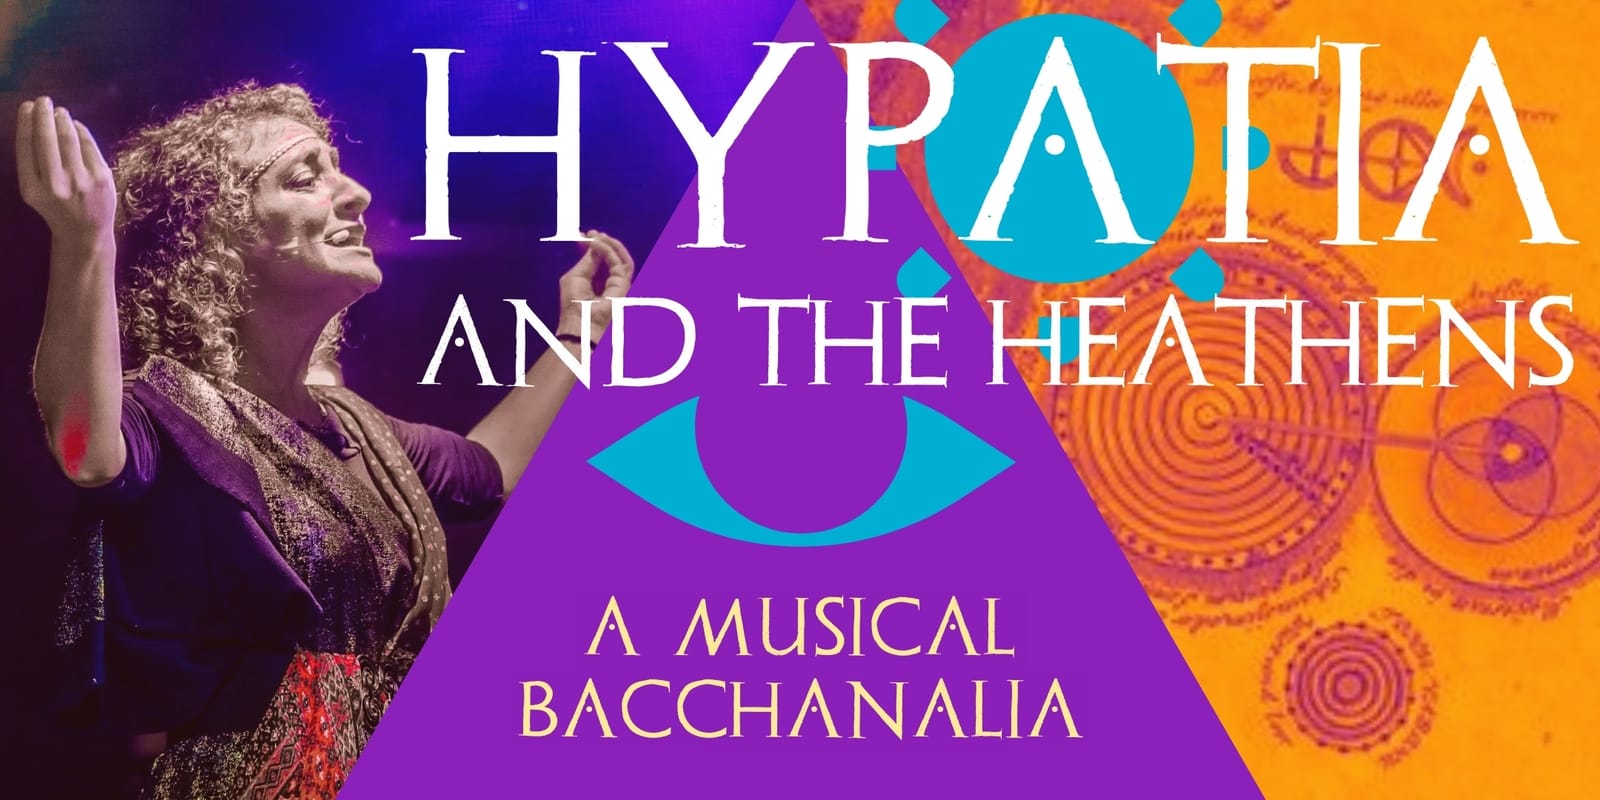 Hypatia and the Heathens